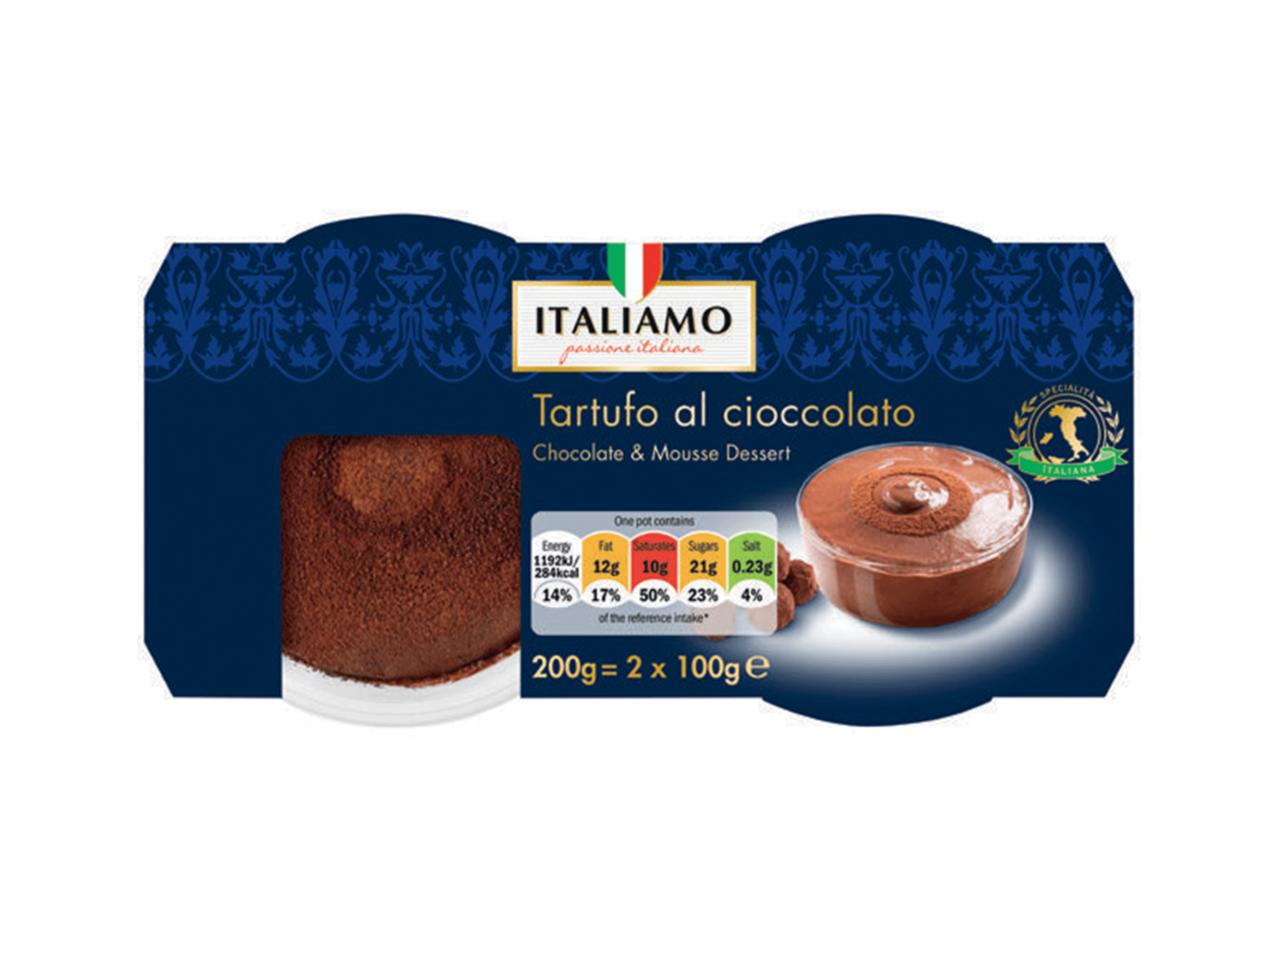 ITALIAMO Mascarpone & Coffee/ Chocolate & Mousse Dessert